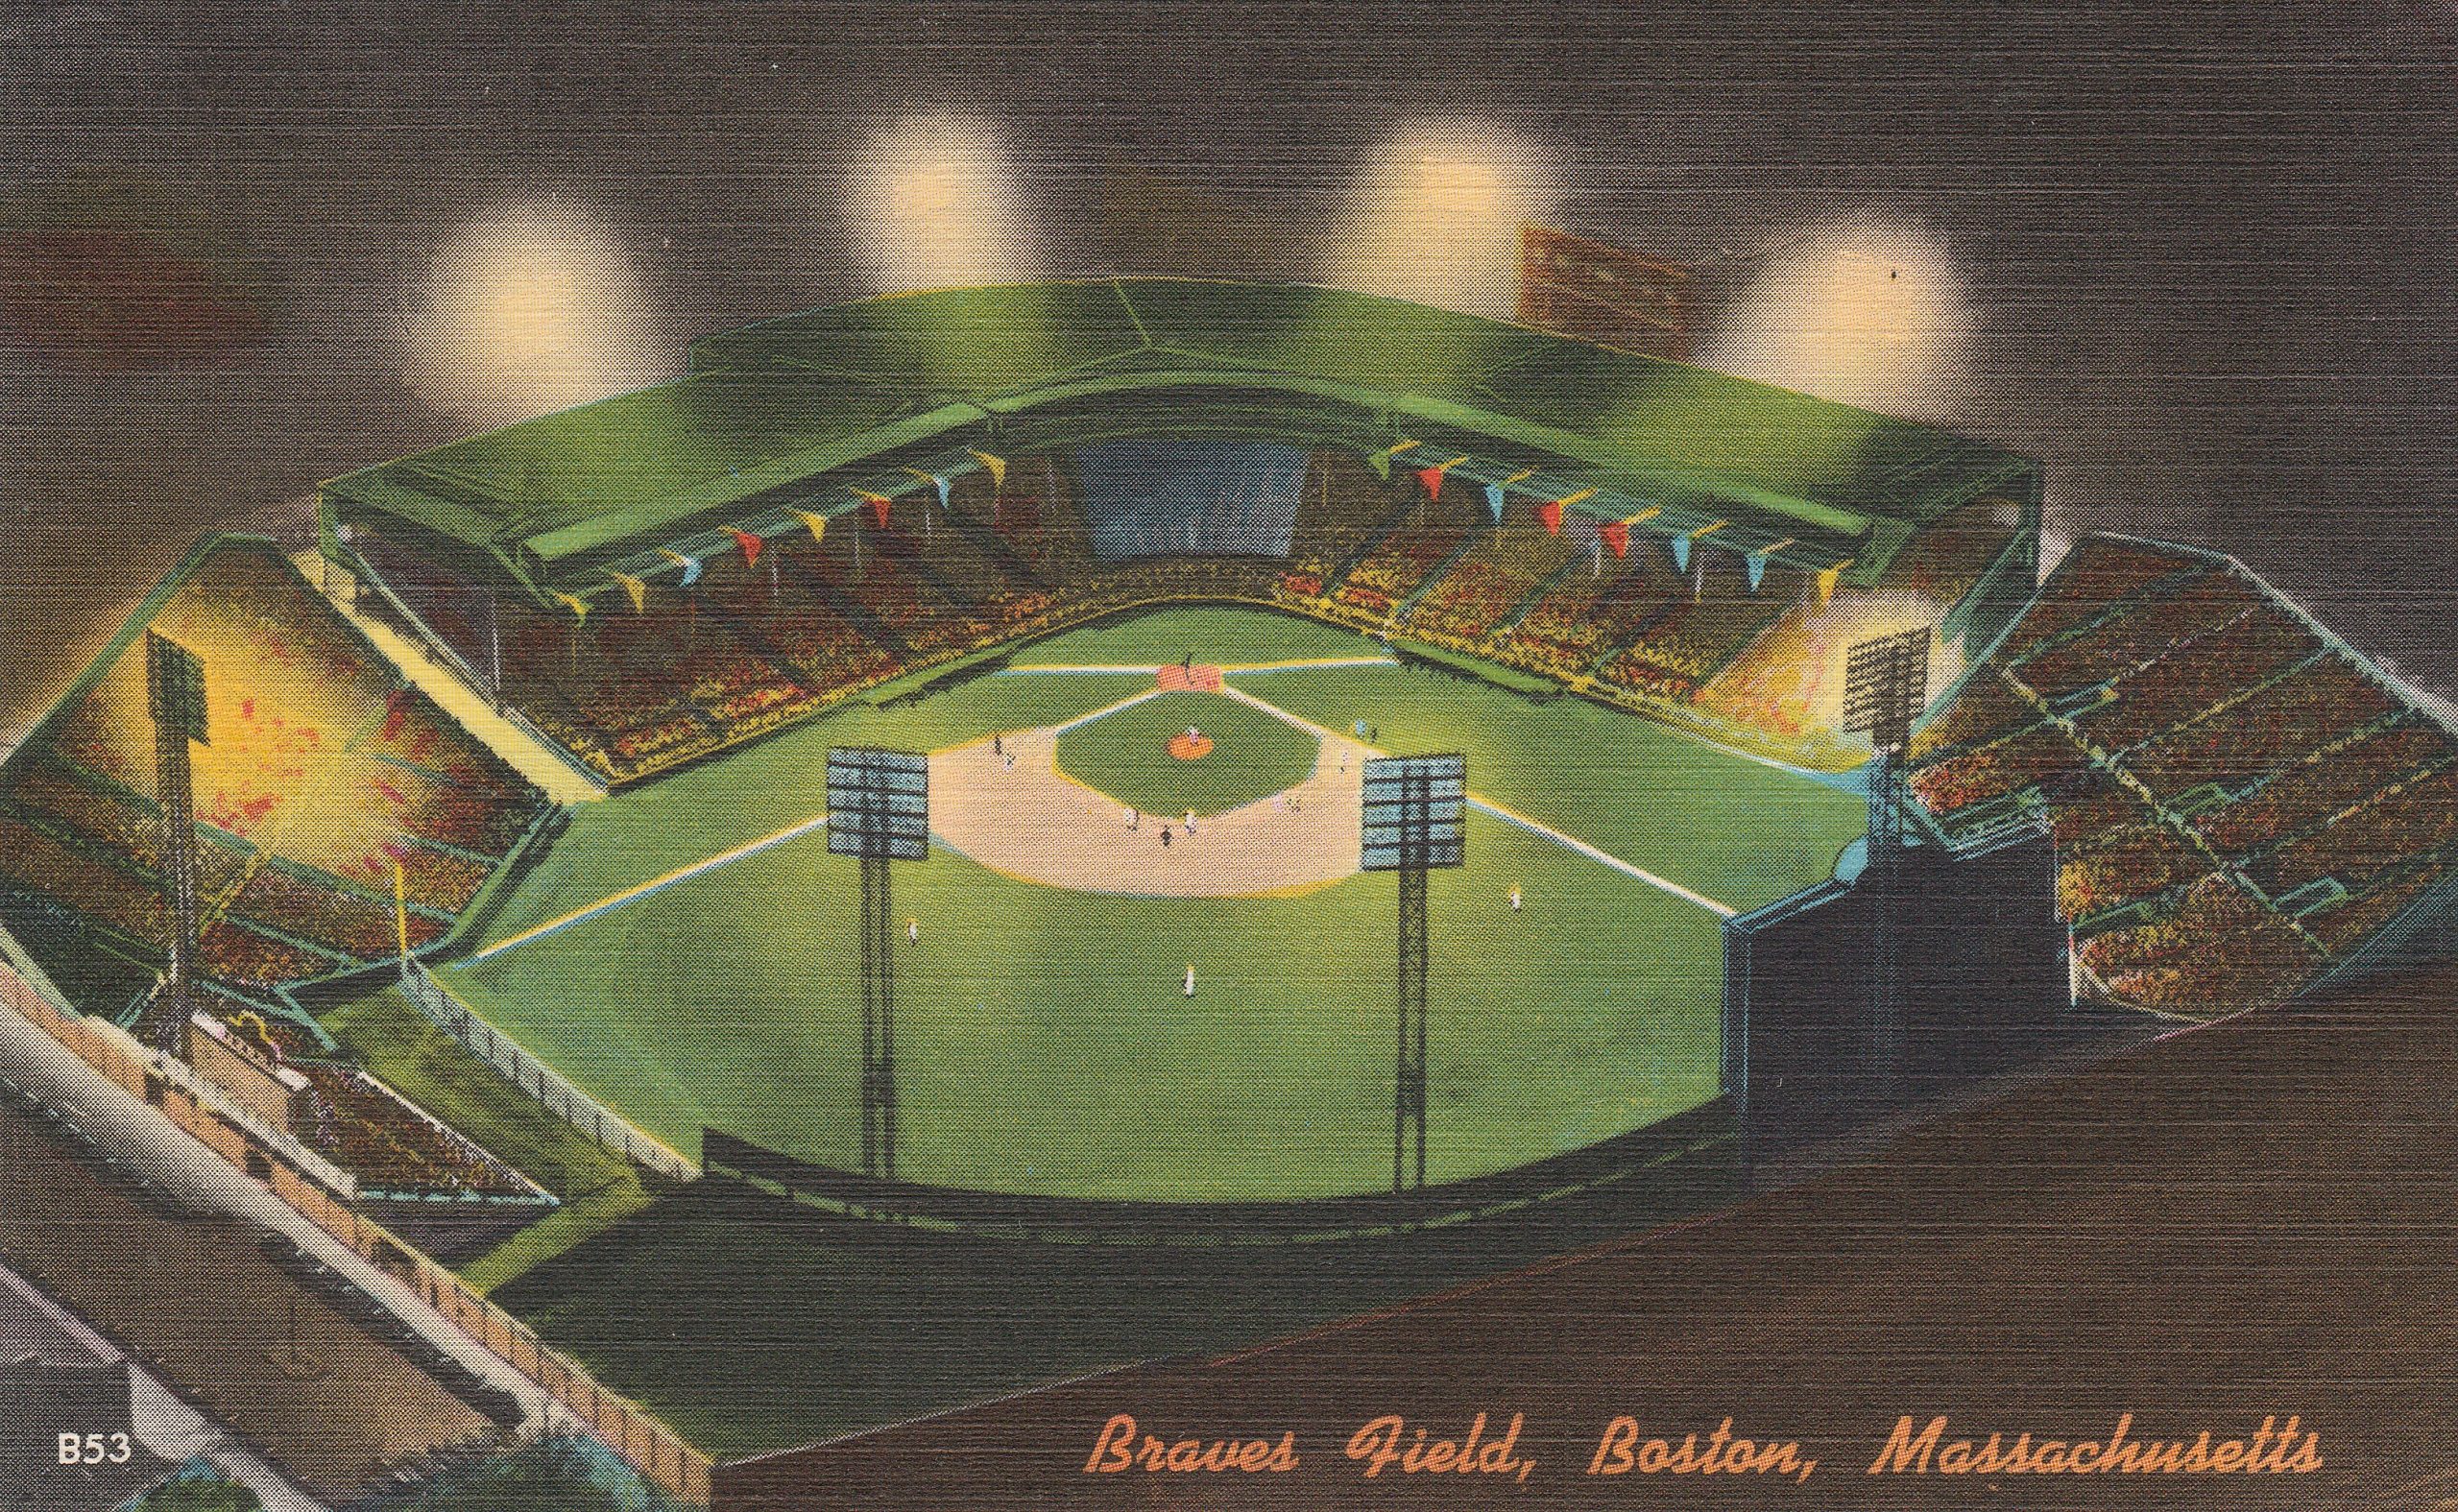 Postcard - Baltimore Baseball Oriole Park